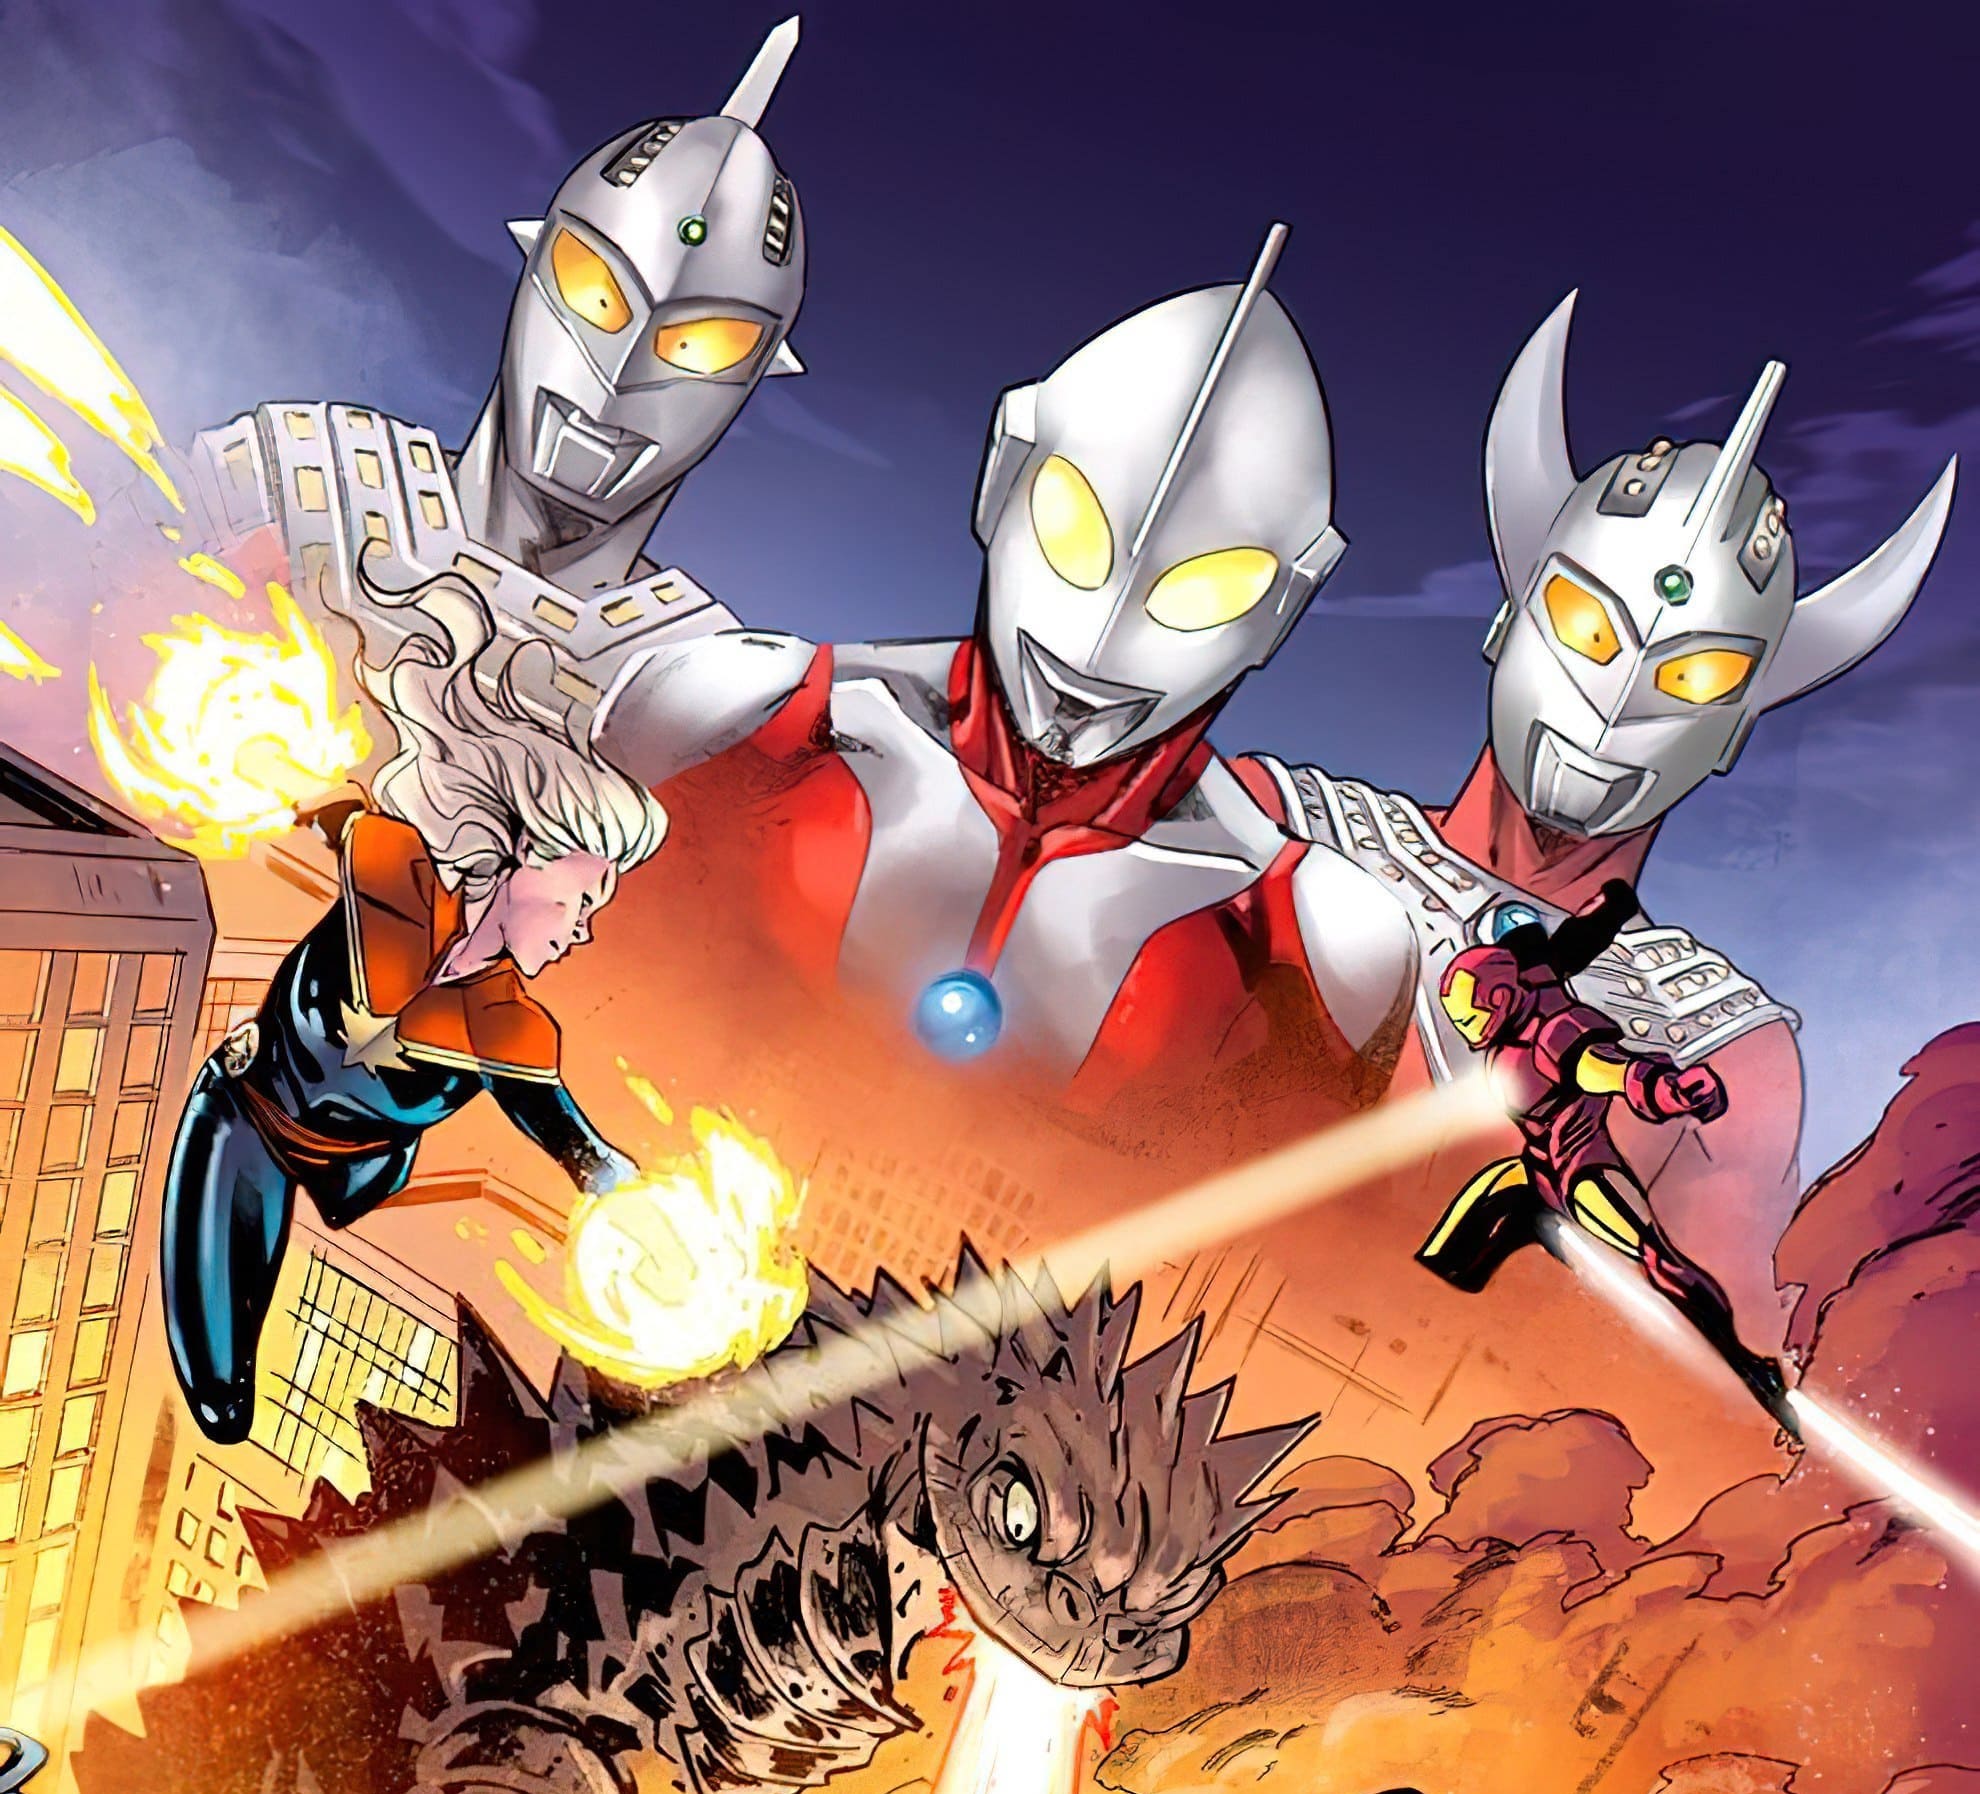 Marvel sets 2023 for Ultraman and Marvel superhero crossover